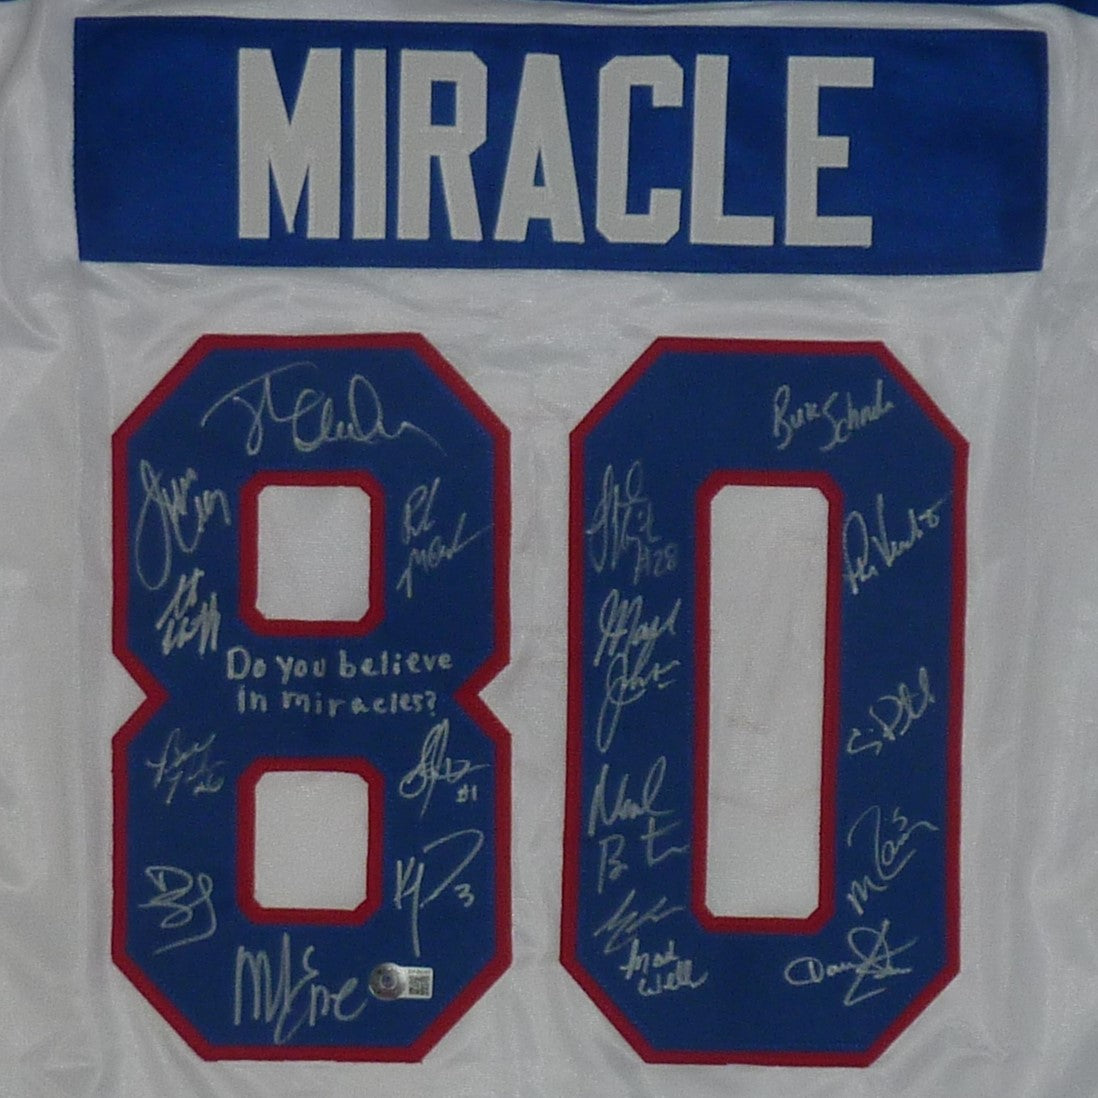 1980 U.S. Olympic Hockey Team Autographed (USA White #80) Custom Jersey - Miracle On Ice - 18 Team Member Signatures - Beckett Witnessed